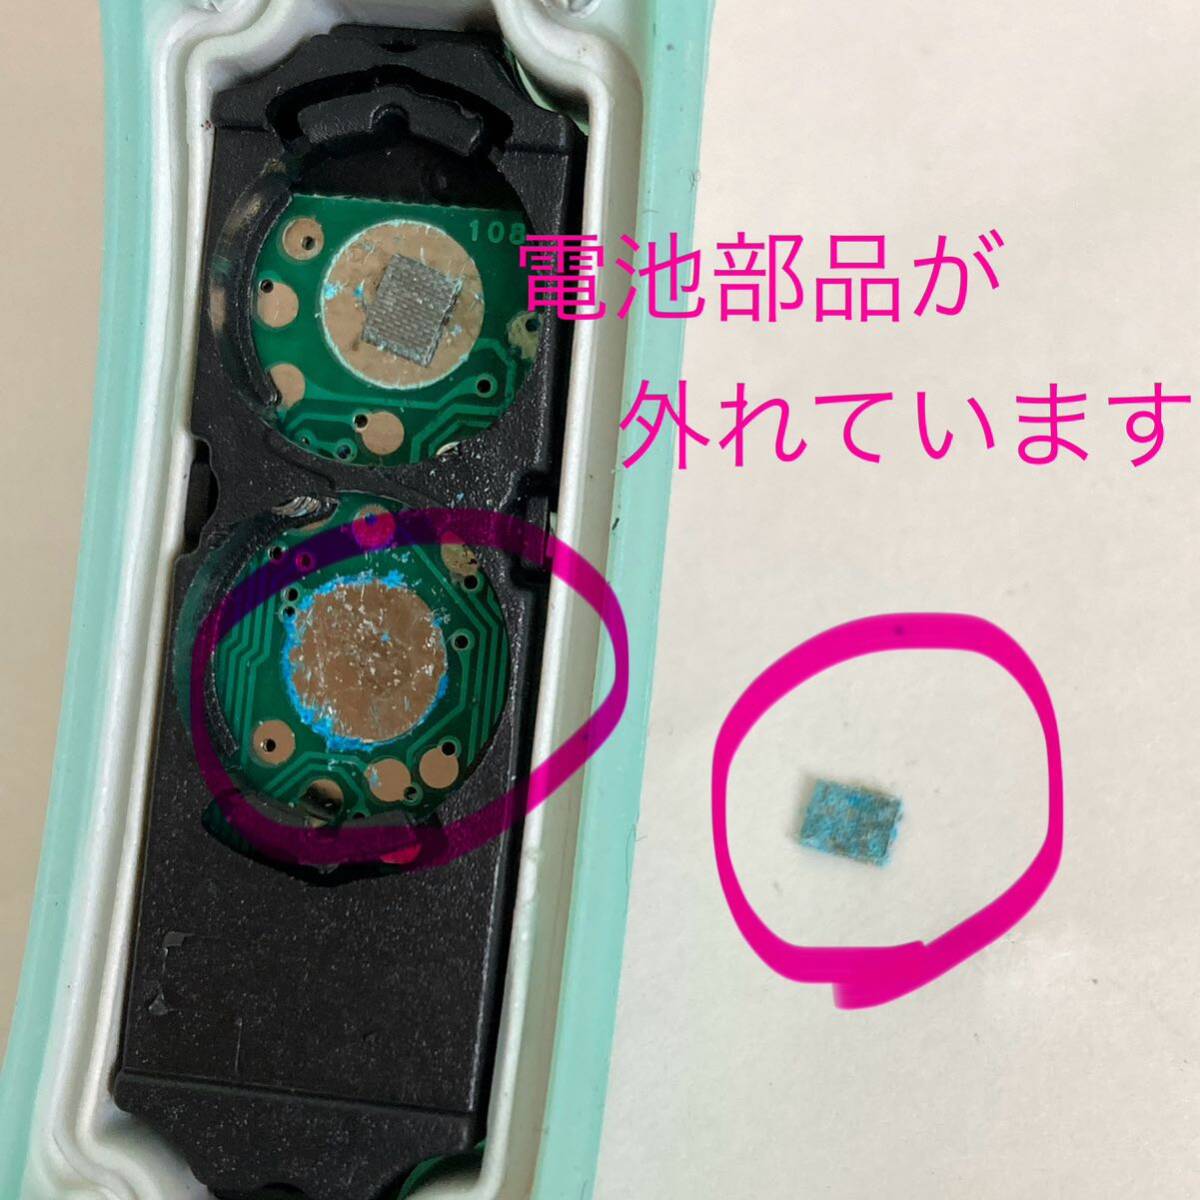  Raver цифровой наручные часы утиль зеленый розовый 2 шт. комплект батарейка нет ржавчина есть 